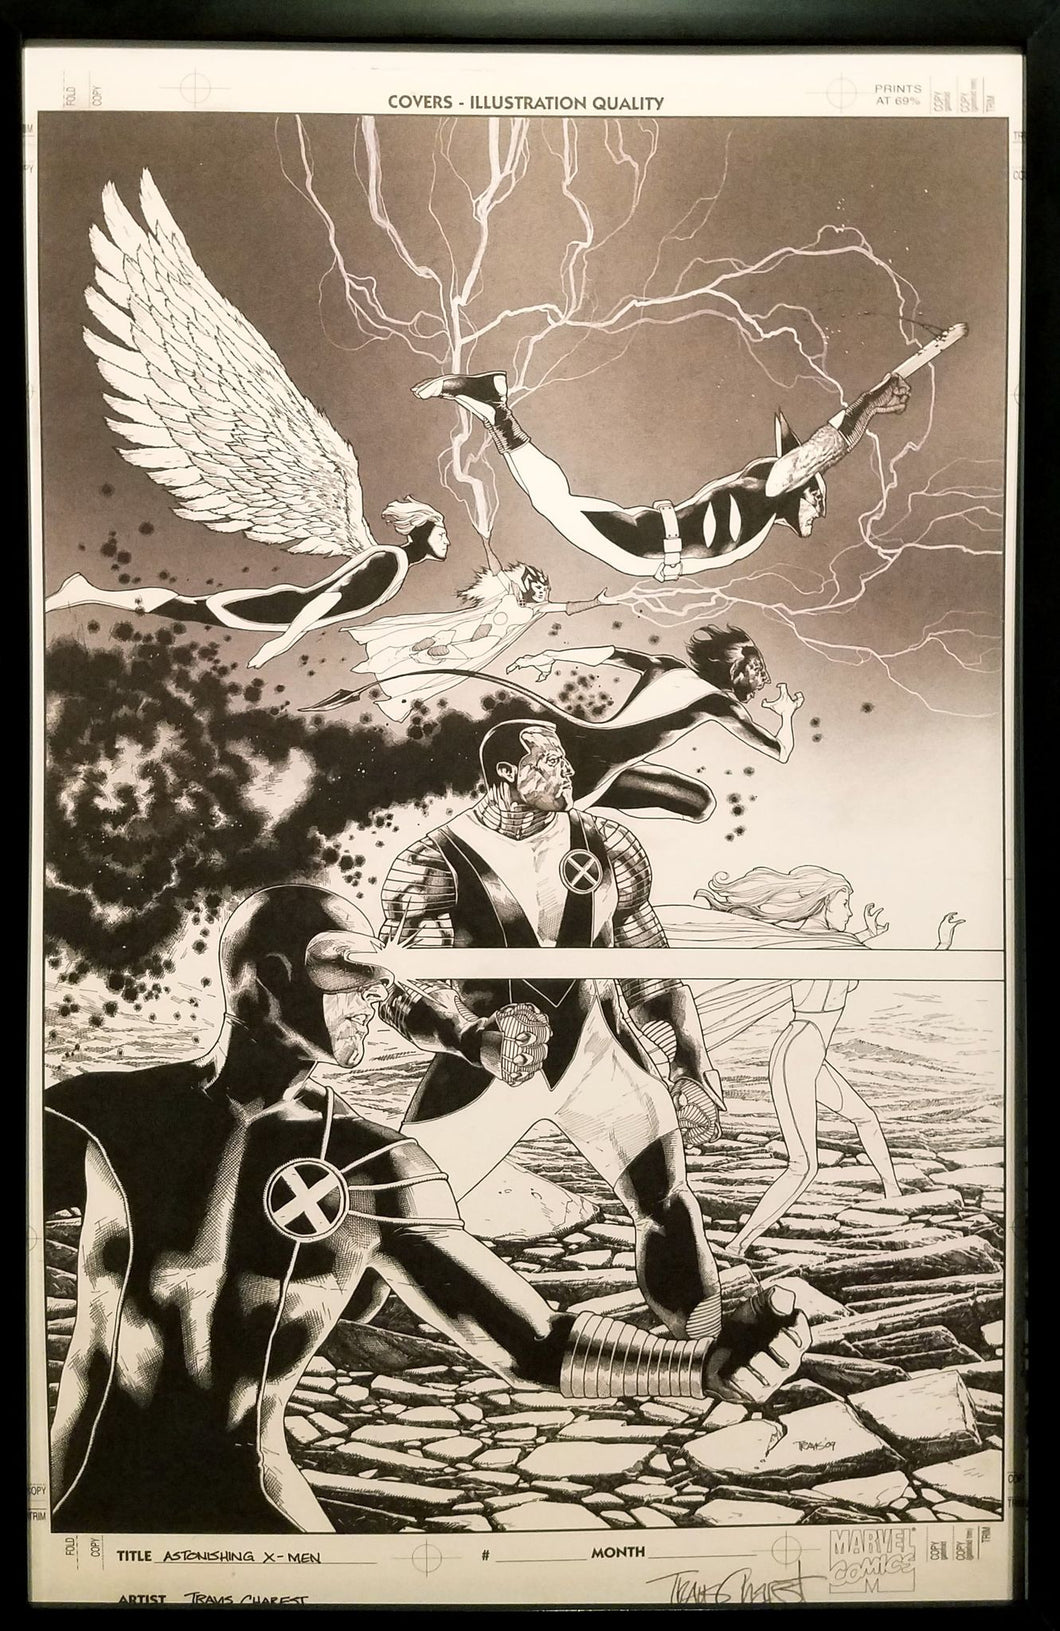 Astonishing X-Men #31 Travis Charest 11x17 FRAMED Original Art Poster Marvel Comics